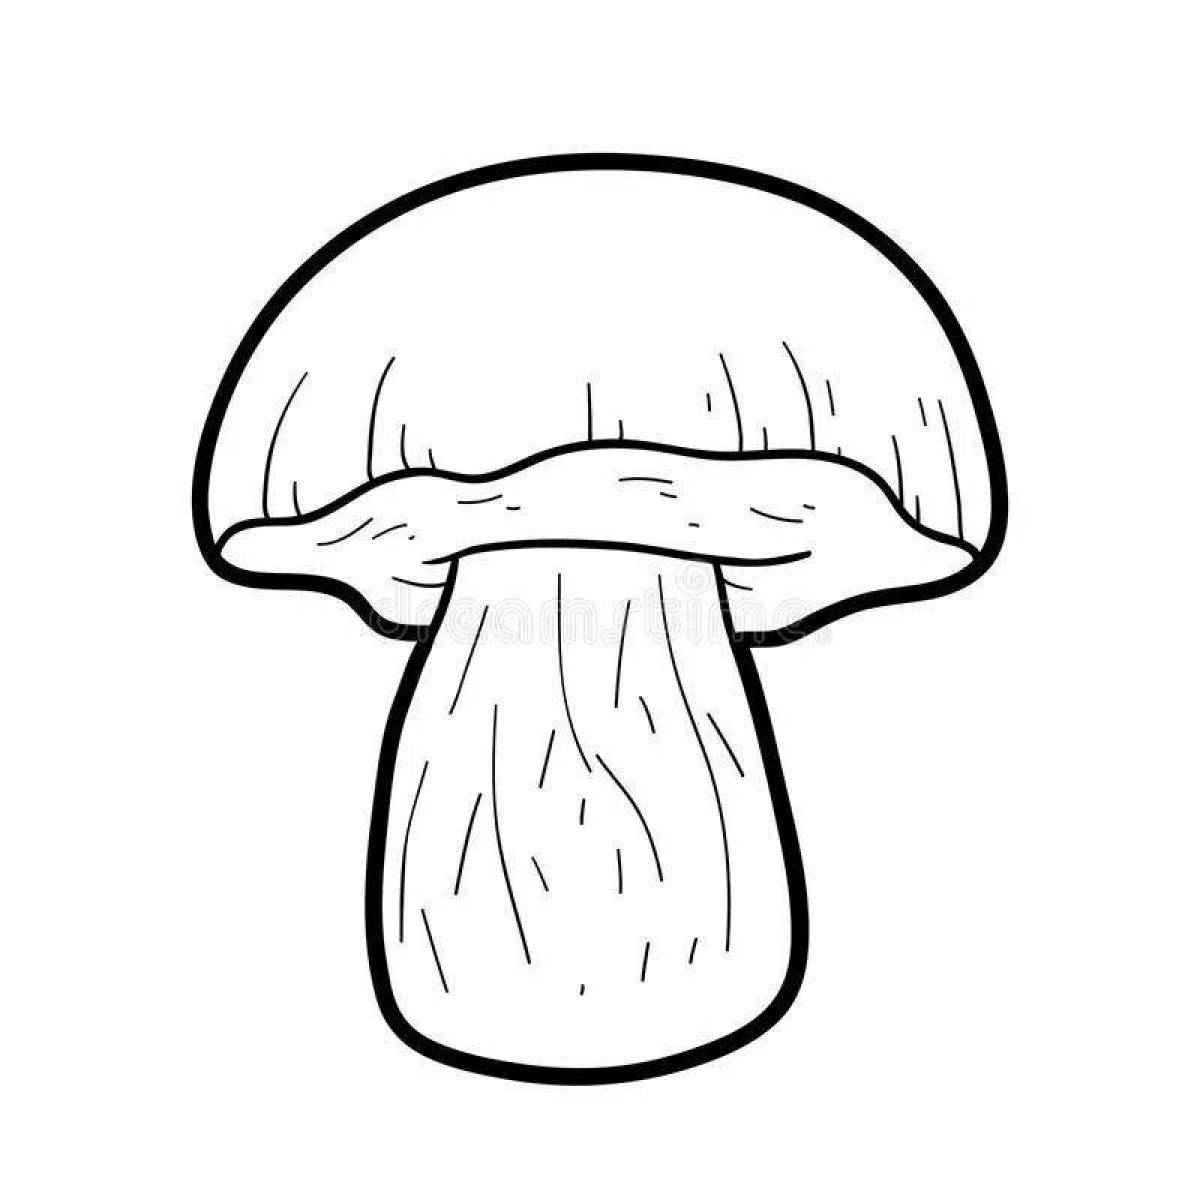 Adorable porcini mushroom coloring book